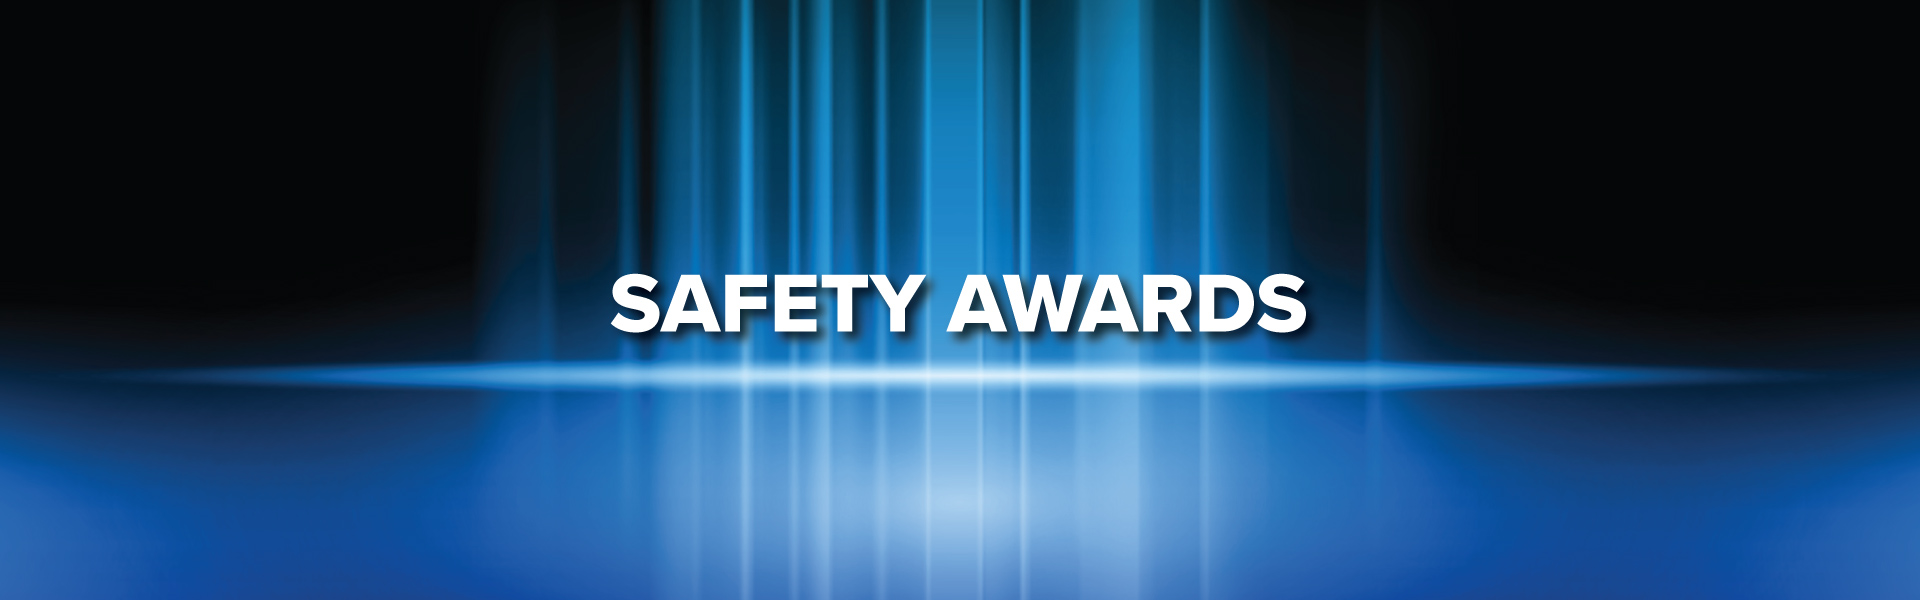 Safety-Awards-Header_1920x600